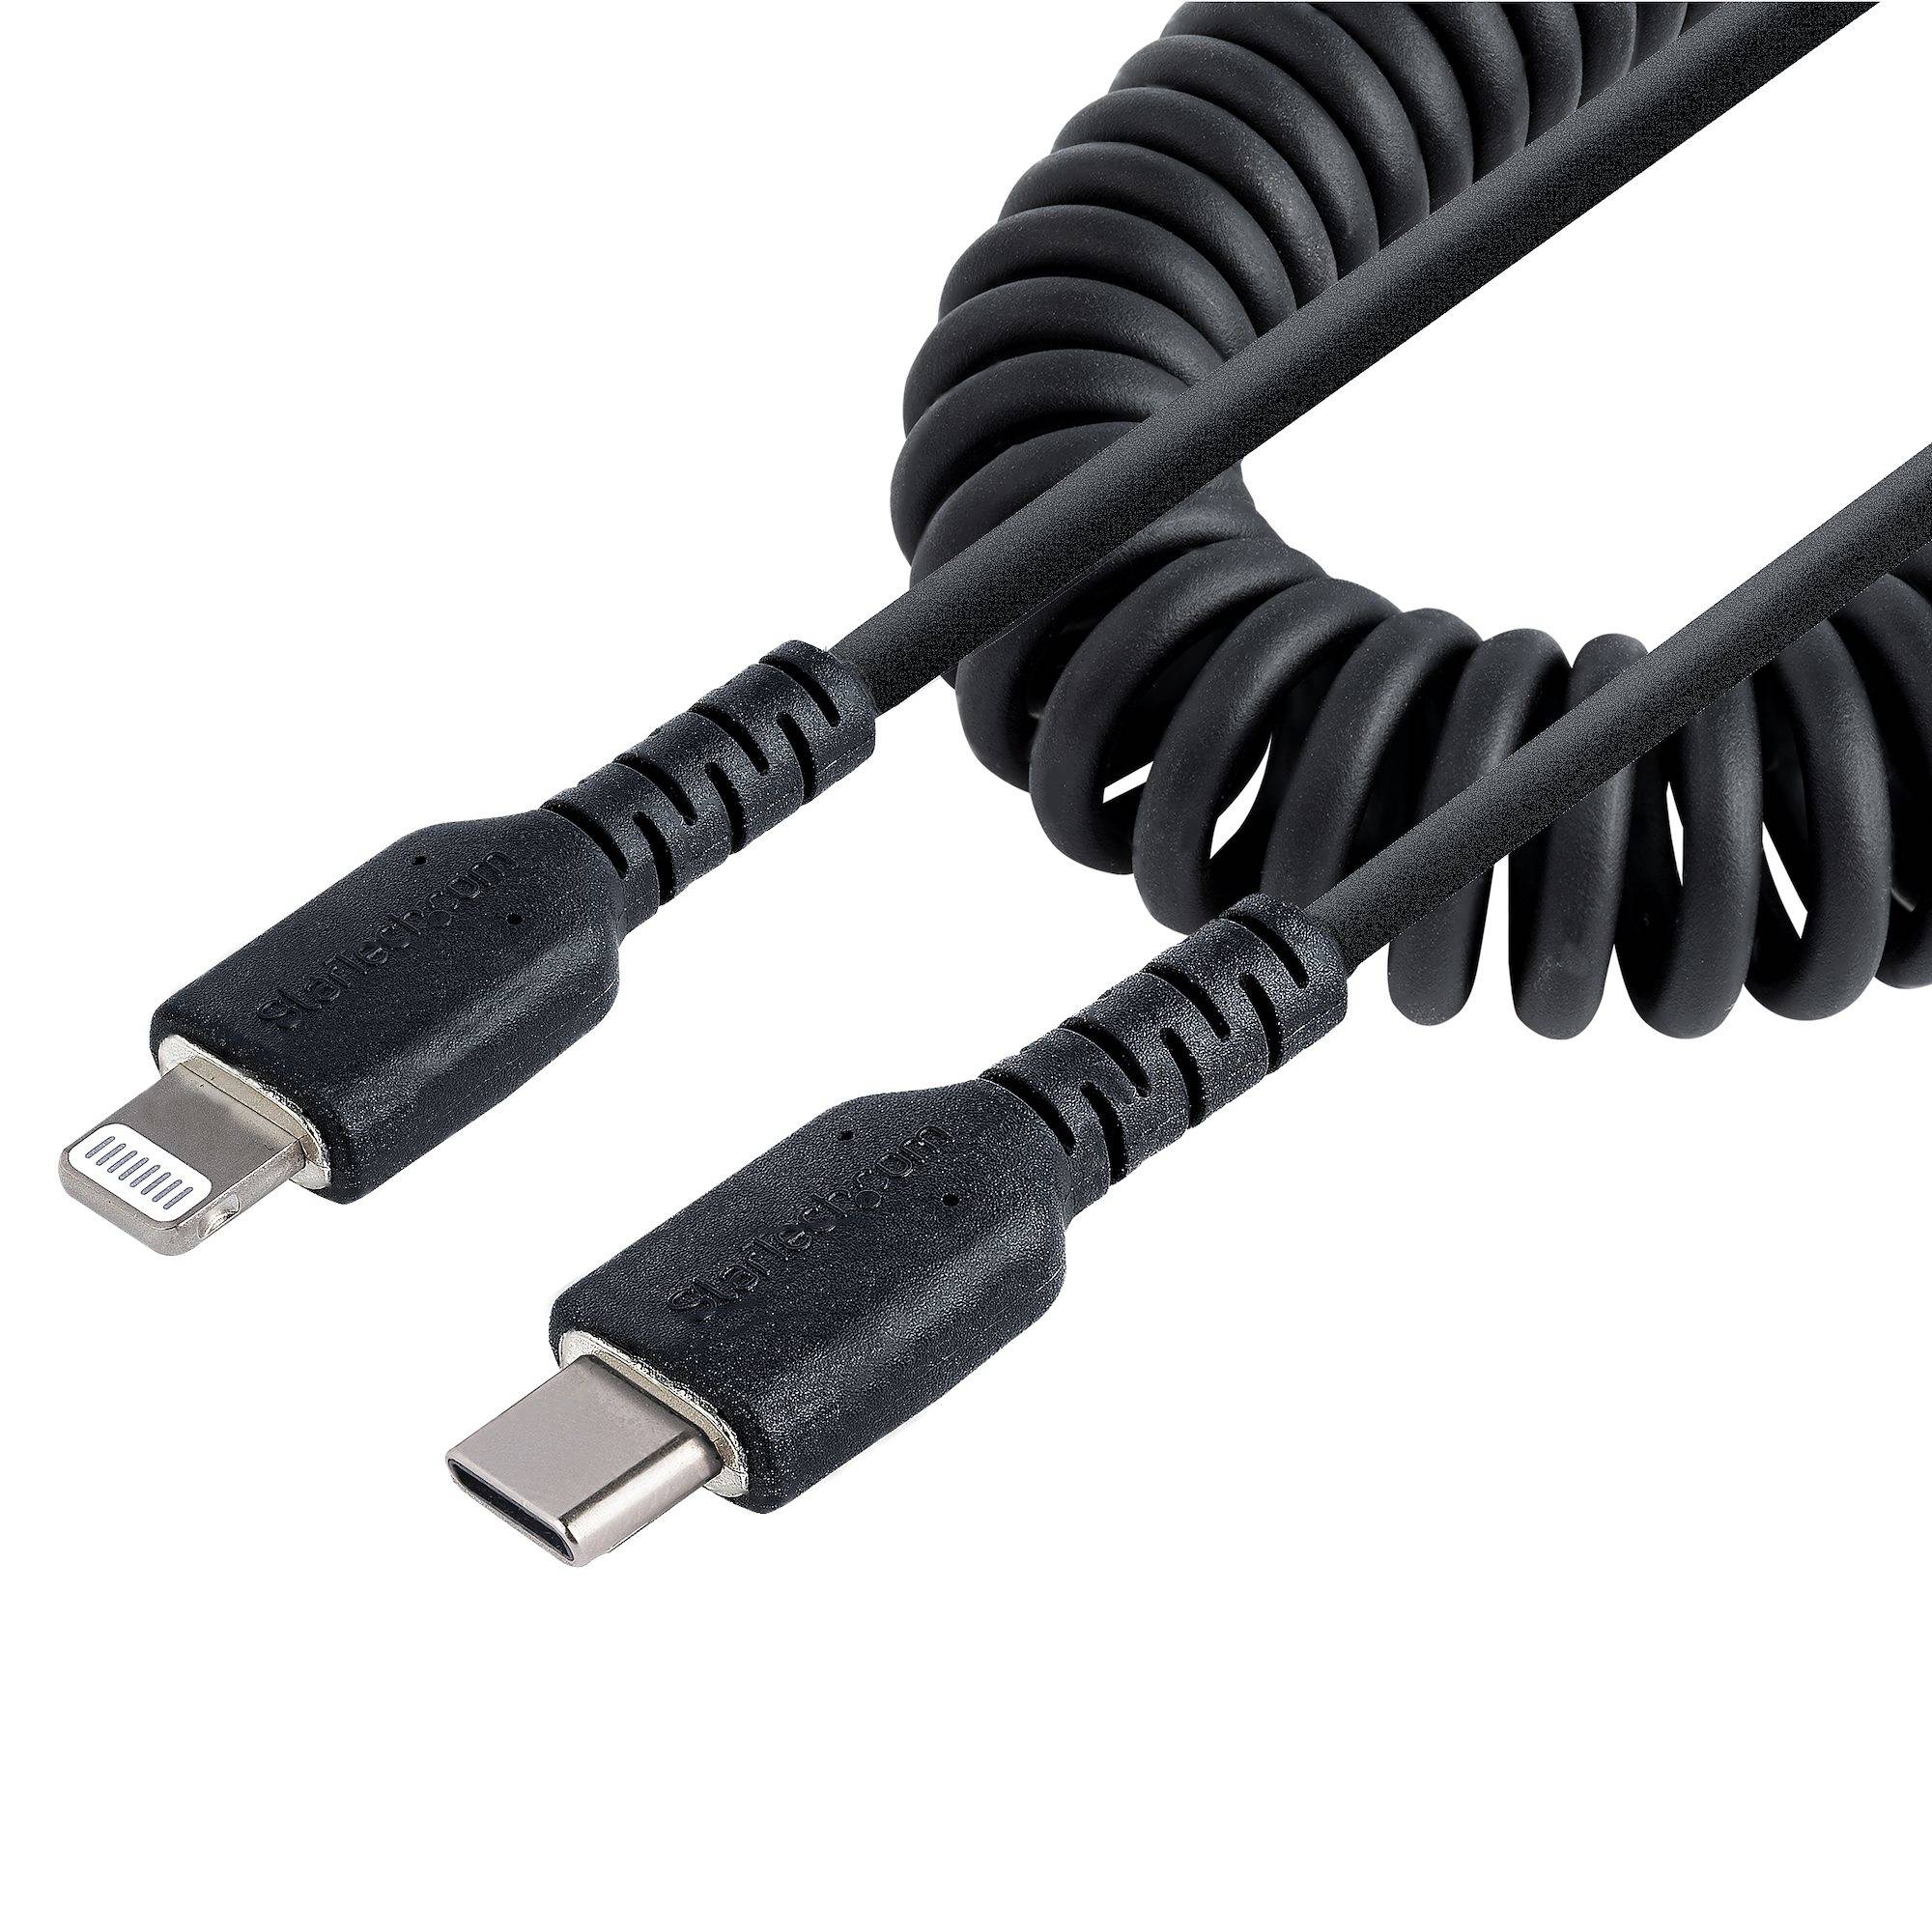 Rca Informatique - Image du produit : USB C TO LIGHTNING CABLE - 50CM (20IN) COILED CABLE BLACK